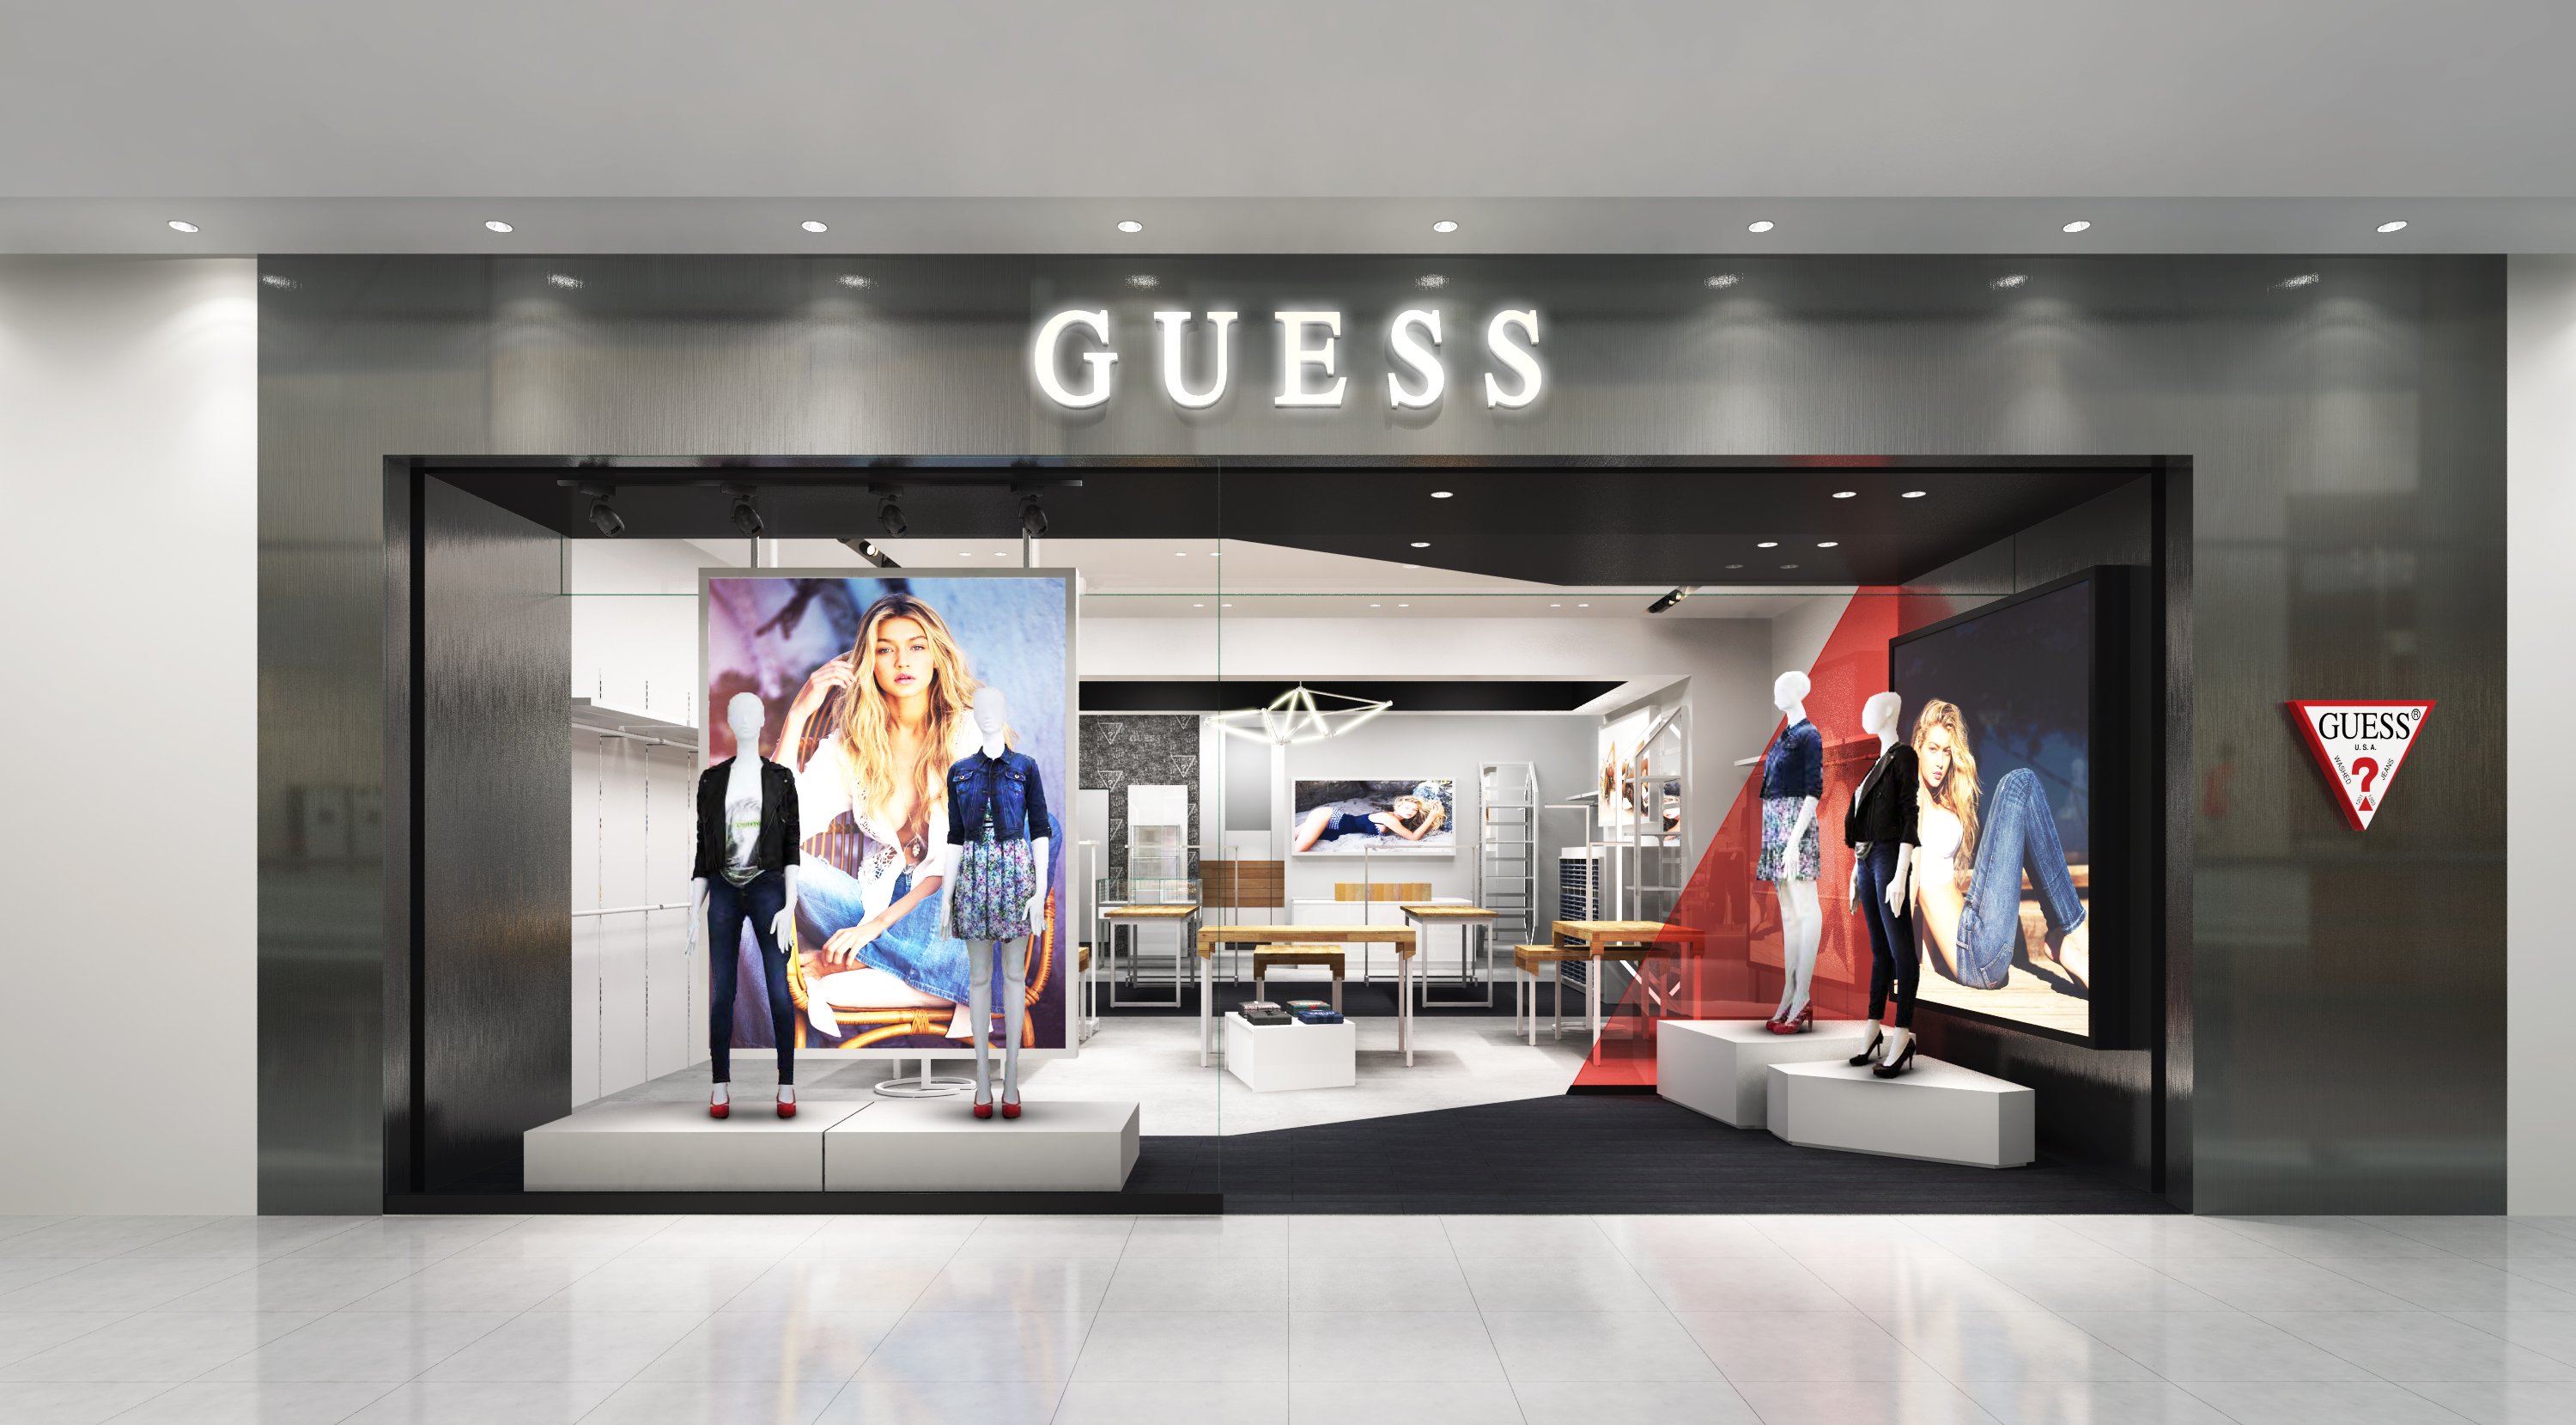 Guess ゲス ららぽーと立川立飛に新店舗オープン Guess Japan 合同会社のプレスリリース